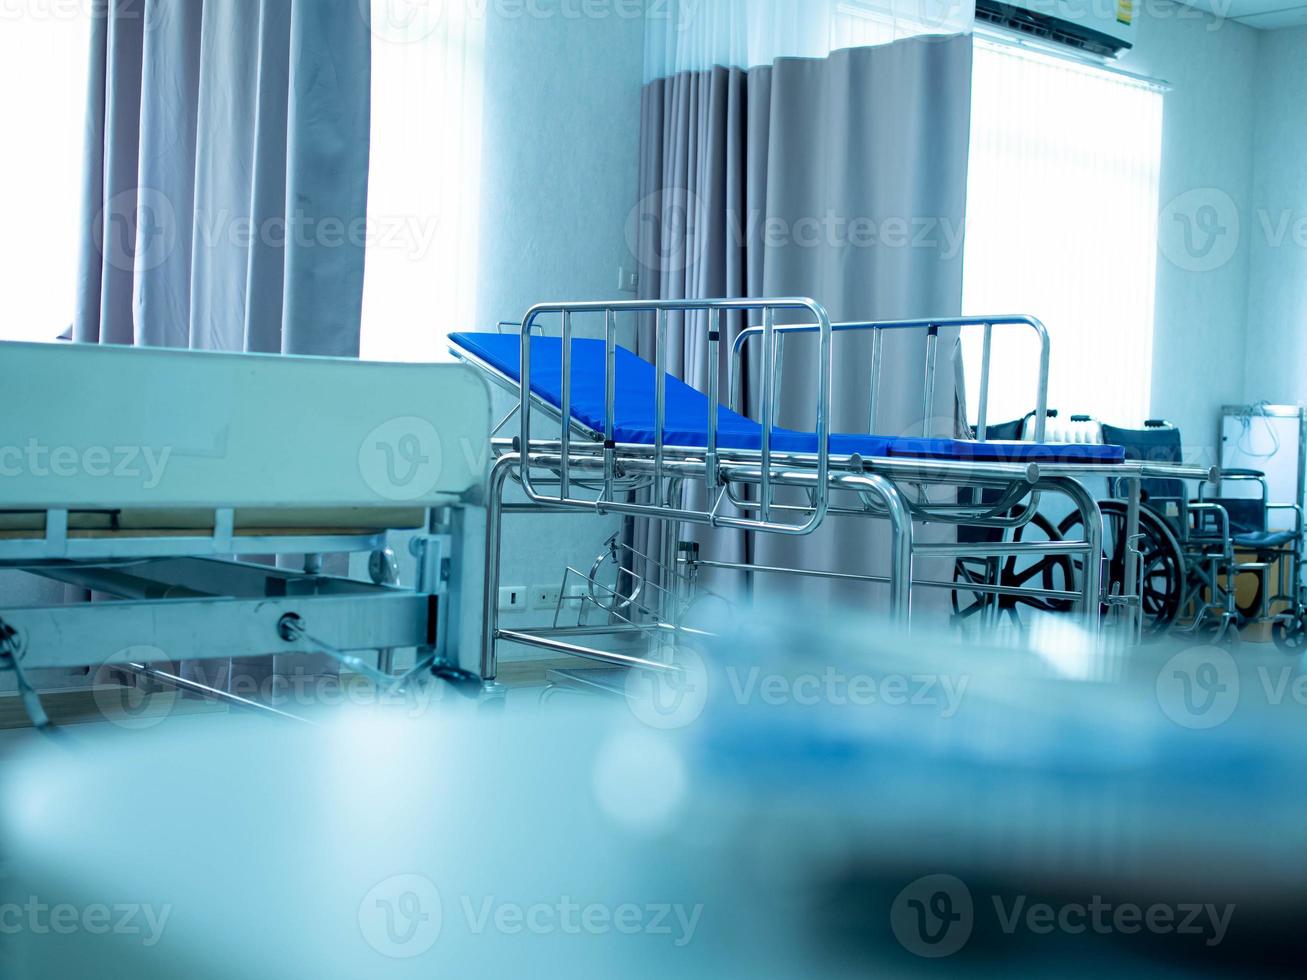 ziekenhuis kliniek laboratorium afdeling laboratorium operatie noodgeval ambulance kamer slaapkamer behandeling gezondheidszorg medisch arts technologie chirurg diagnose letsel patiënt covid-19 corona virus ziekte vaccin foto